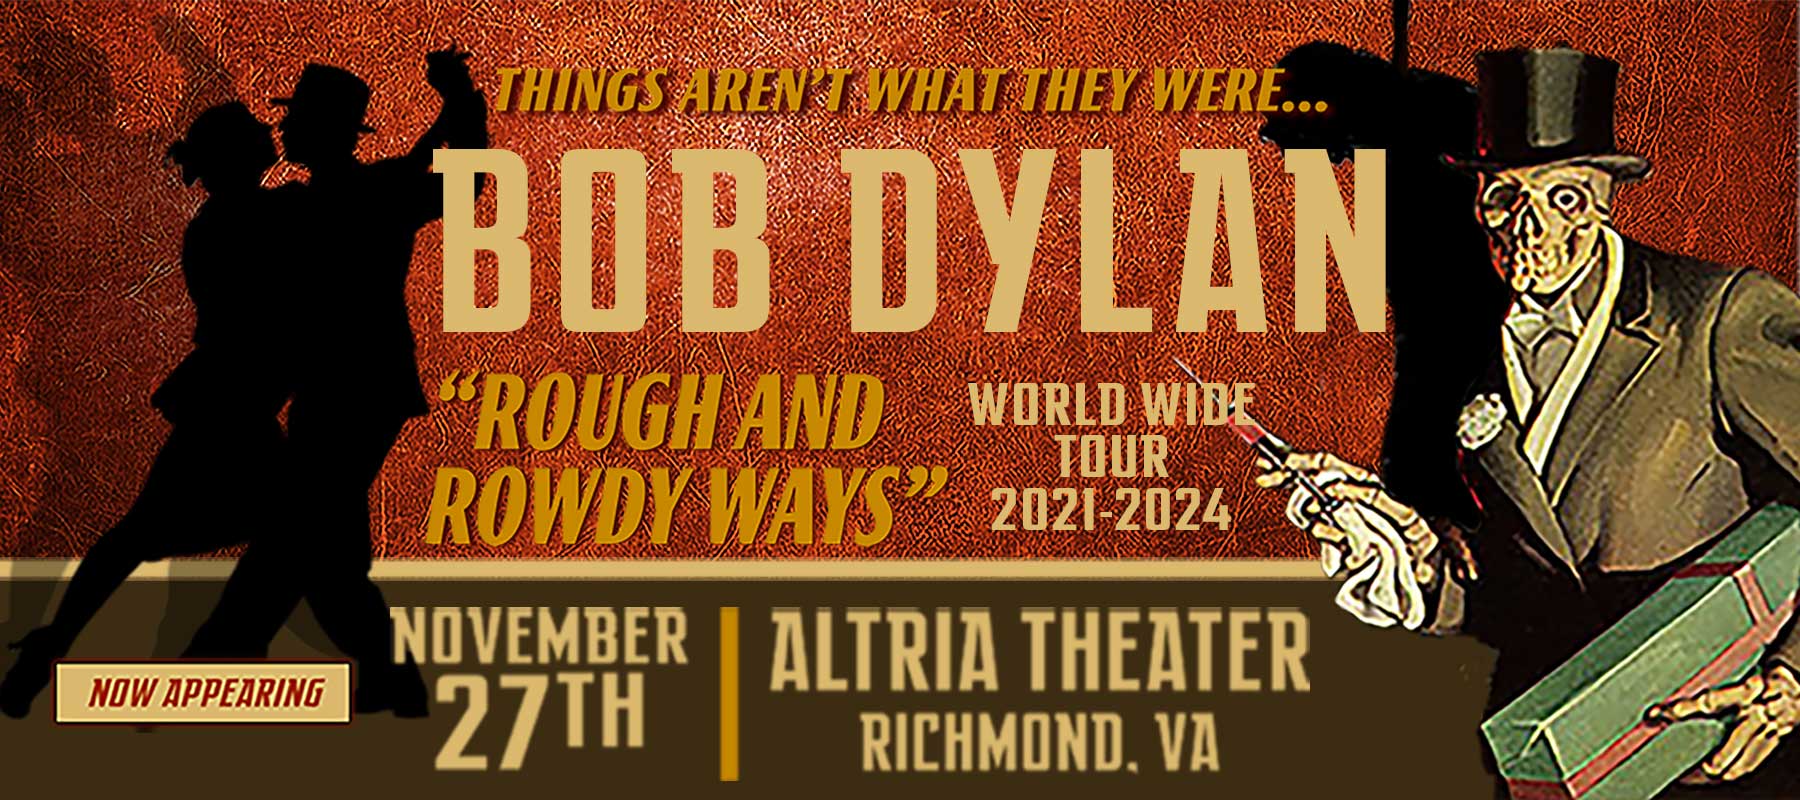 Bob Dylan: Rough and Rowdy Ways Tour